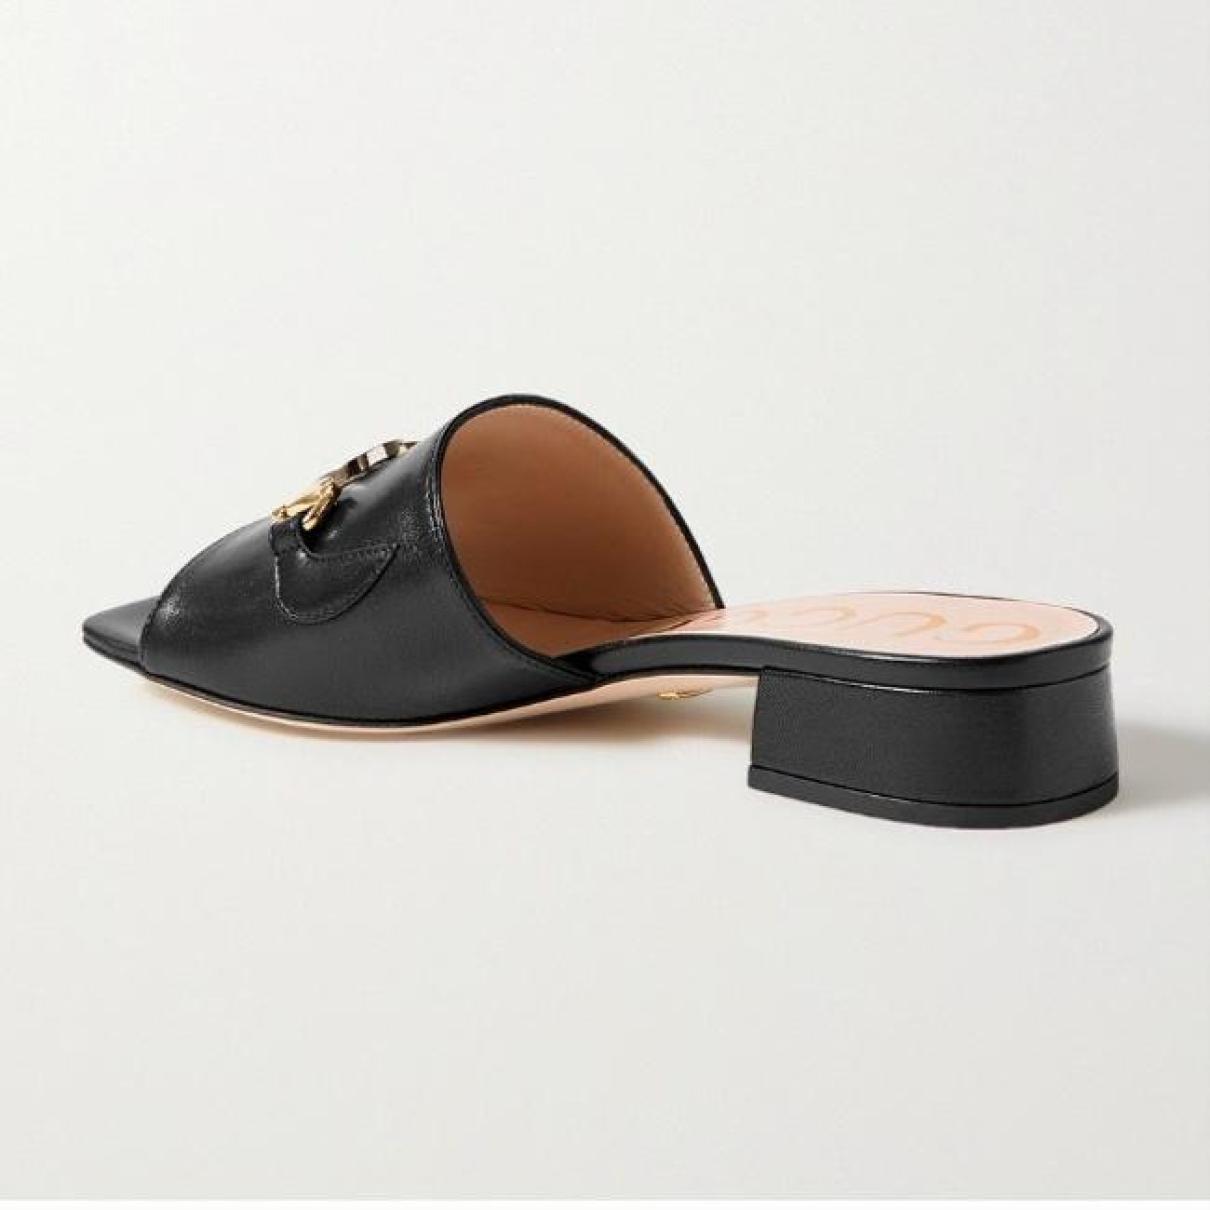 Zumi leather sandal - 2